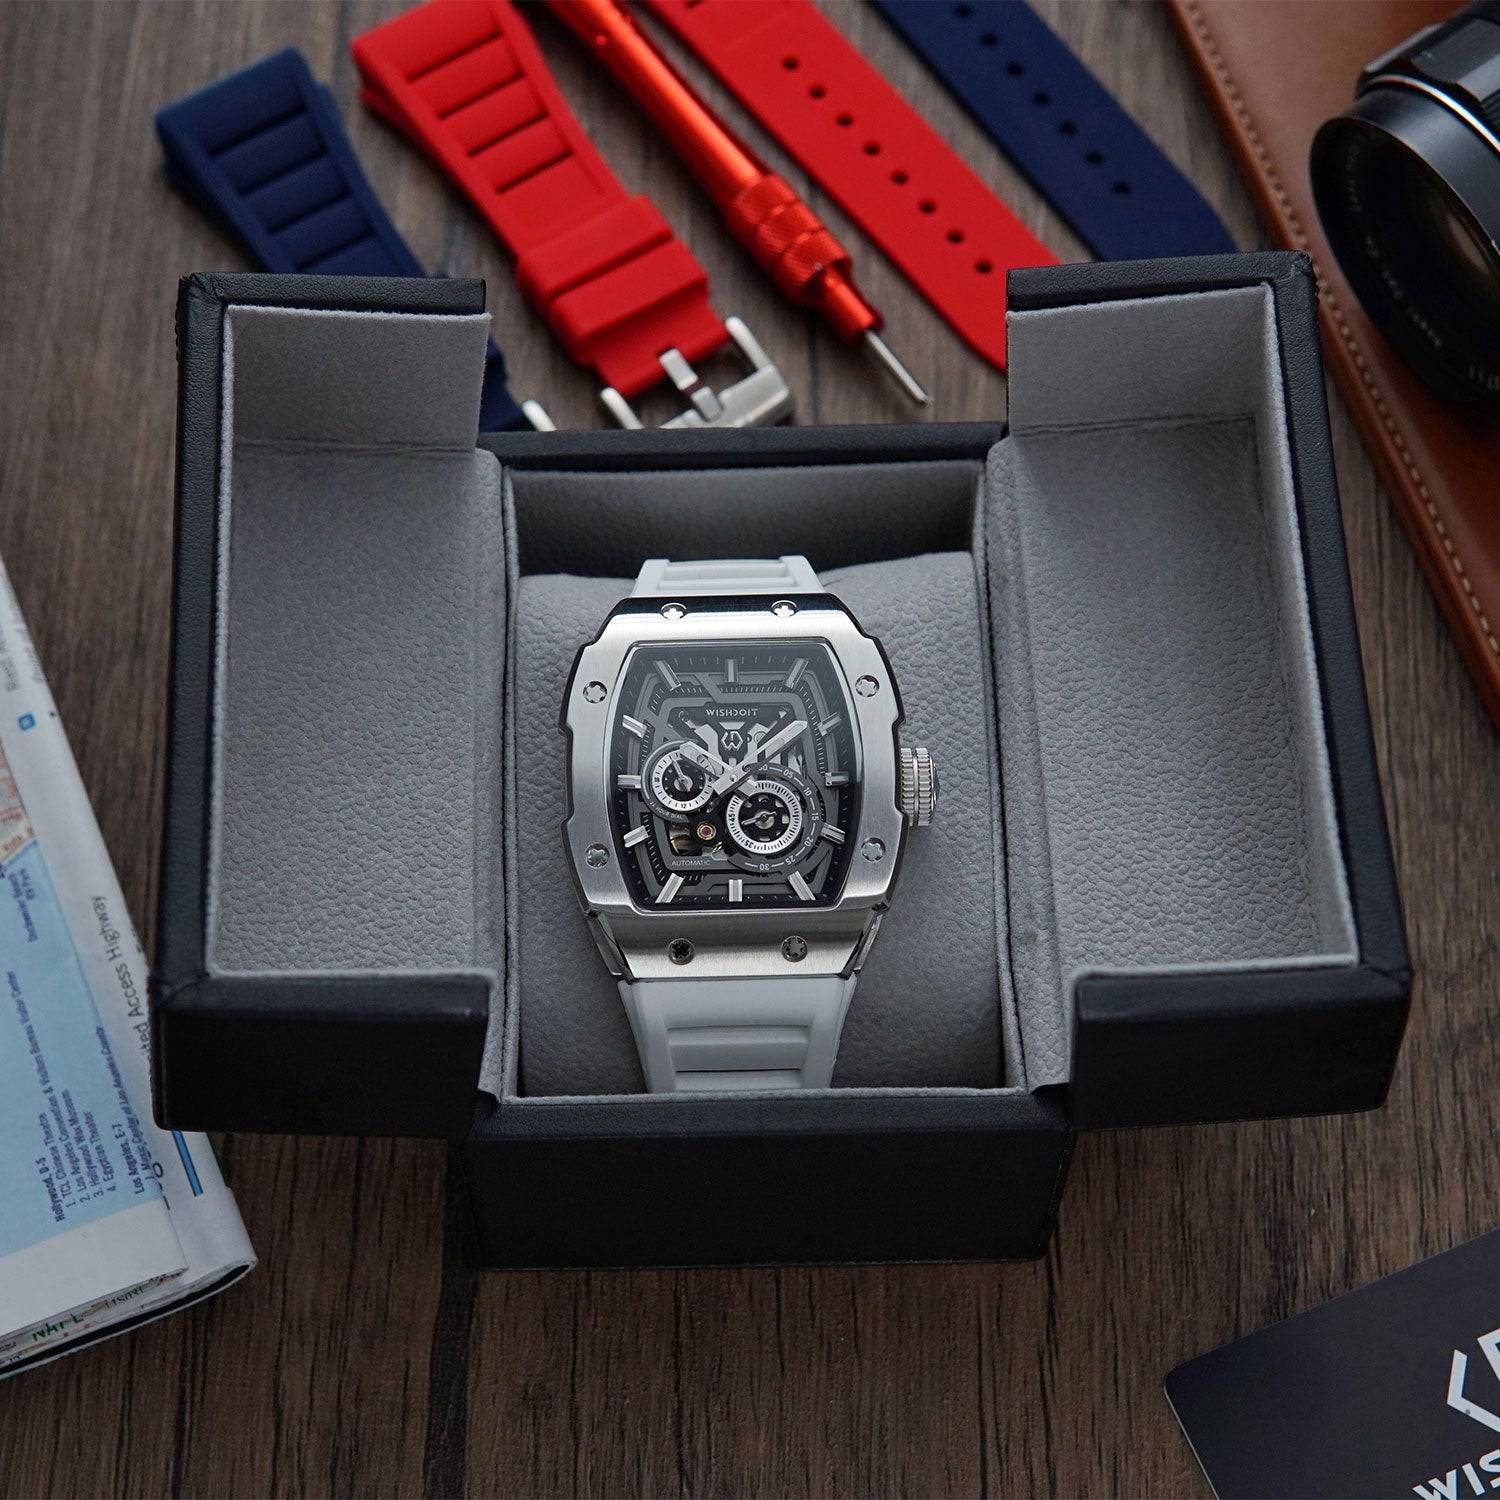 wishdoit-watches-full-speed-mechanical-watches-for-men-silvery-light-blue